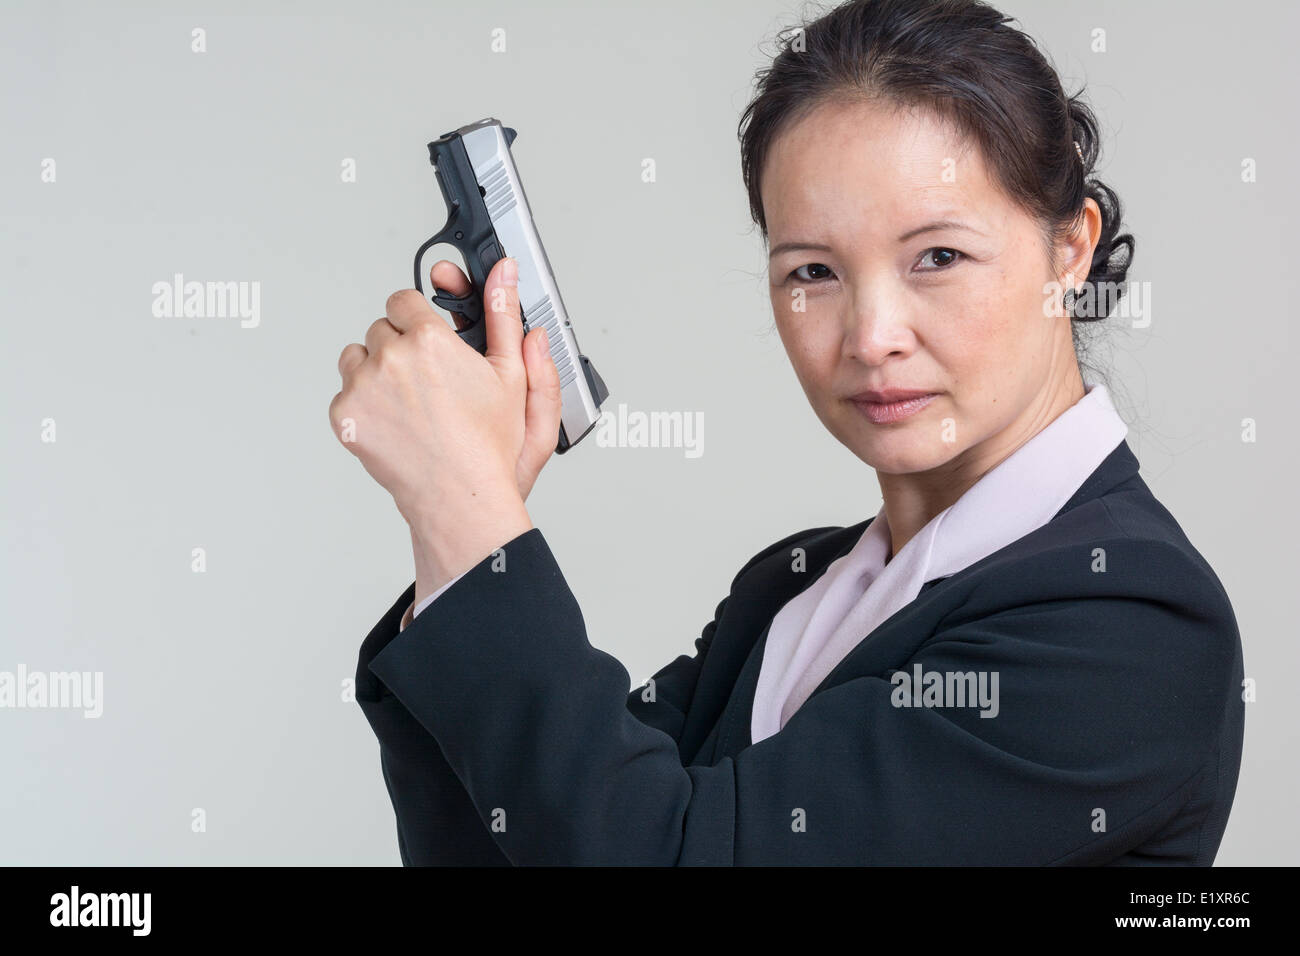 Woman holding a hand gun Stock Photo